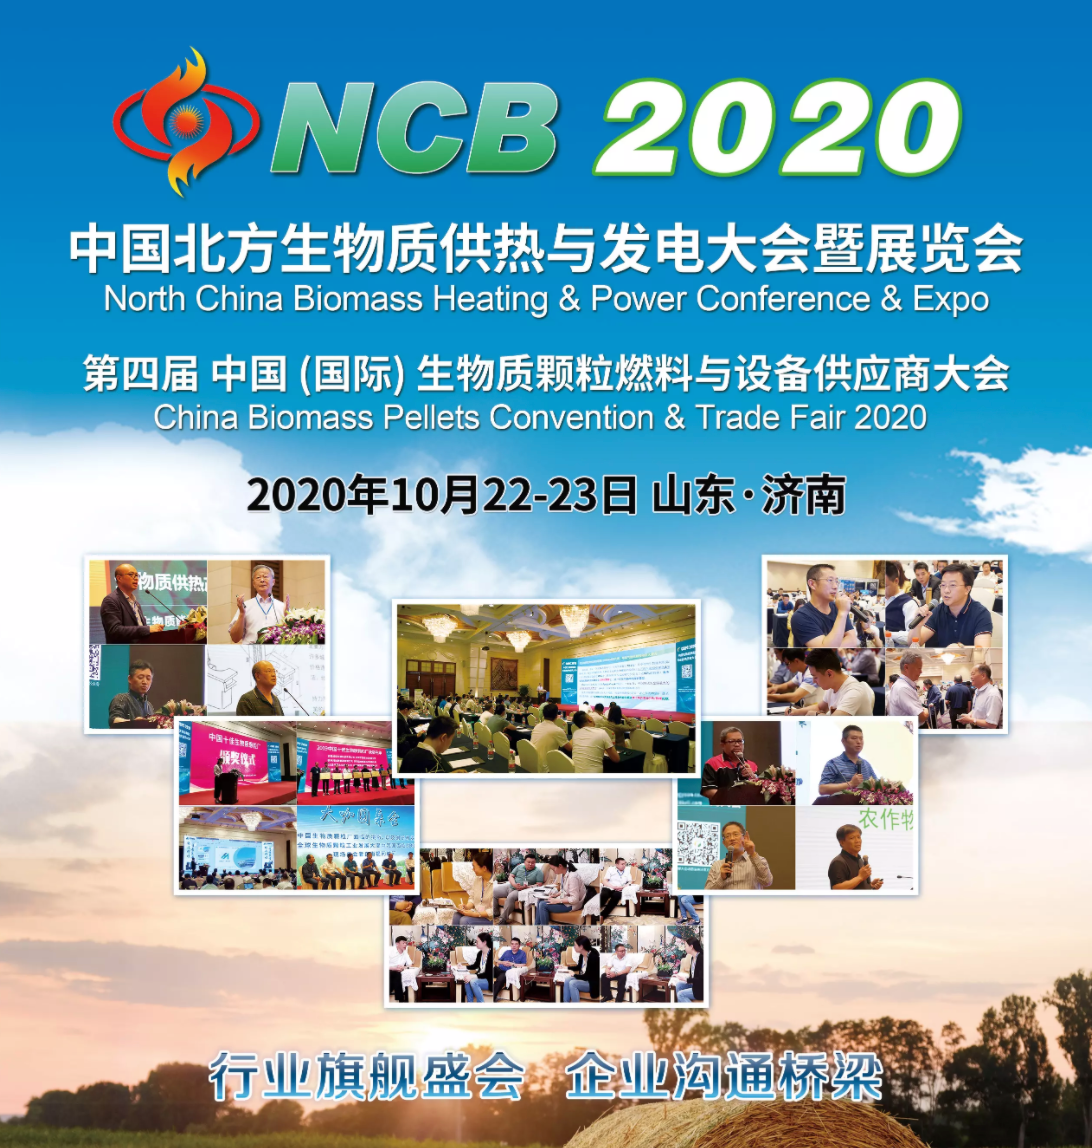 2020中国北方生物质供热与发电大会暨展览会 North China Biomass Heating & Power Conference & Expo 2020 （NCB 2020）